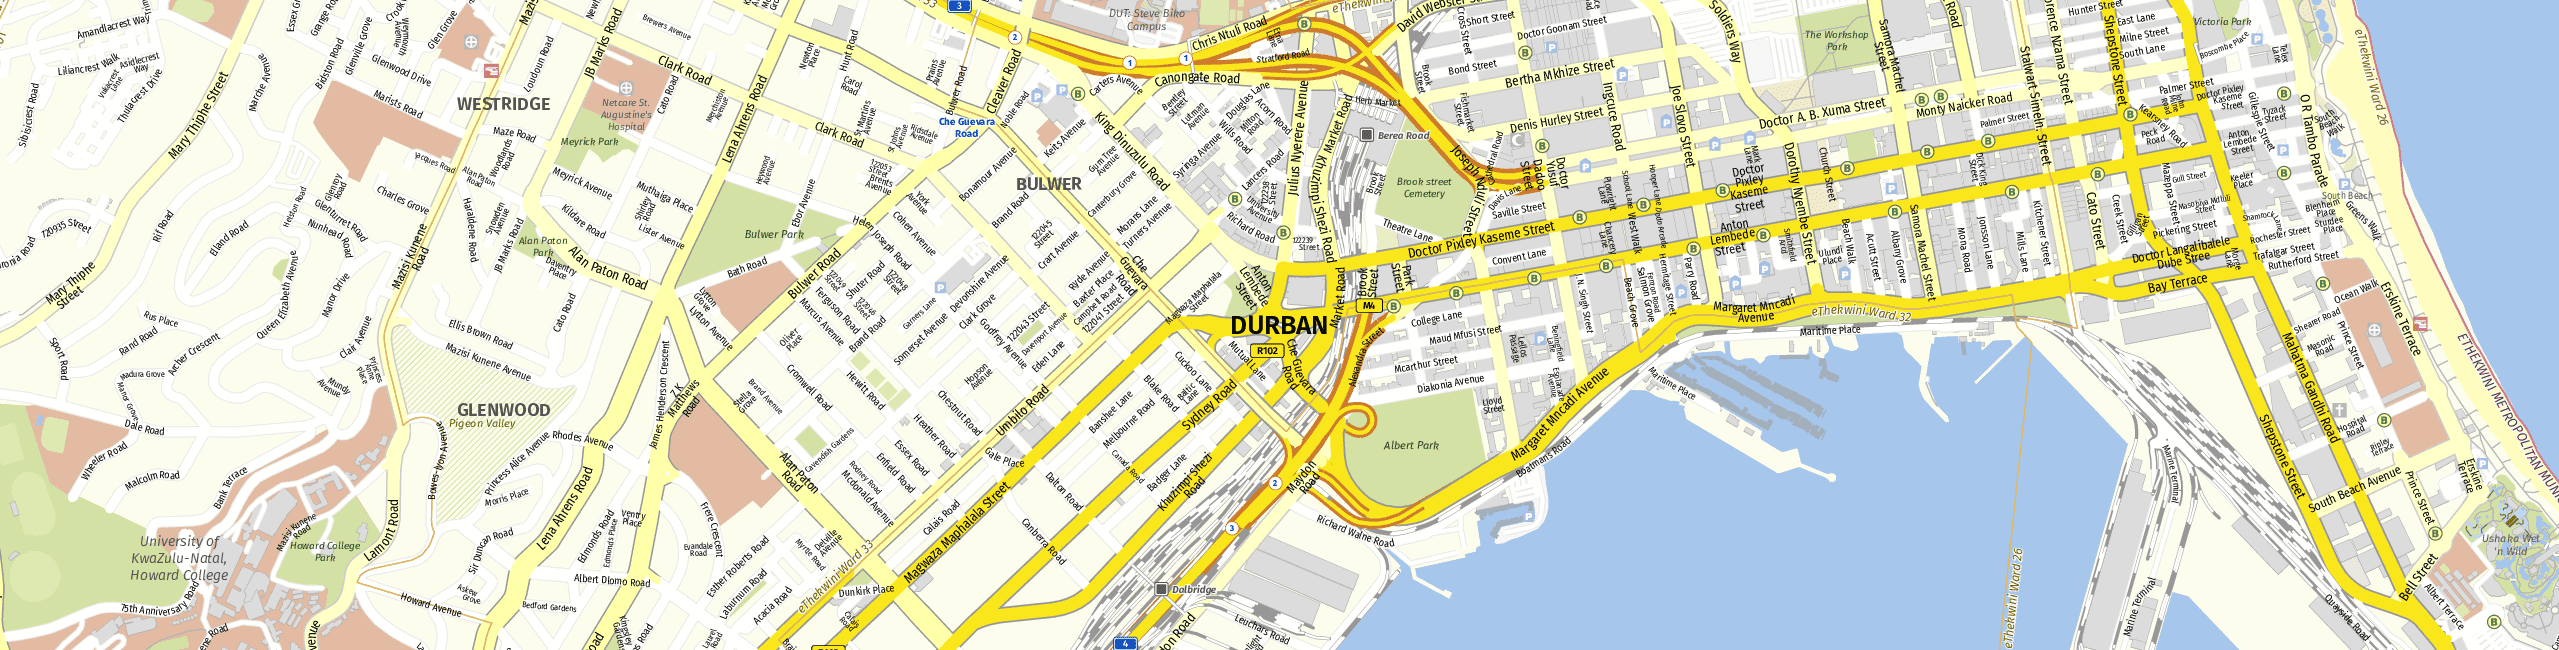 Stadtplan Durban zum Downloaden.